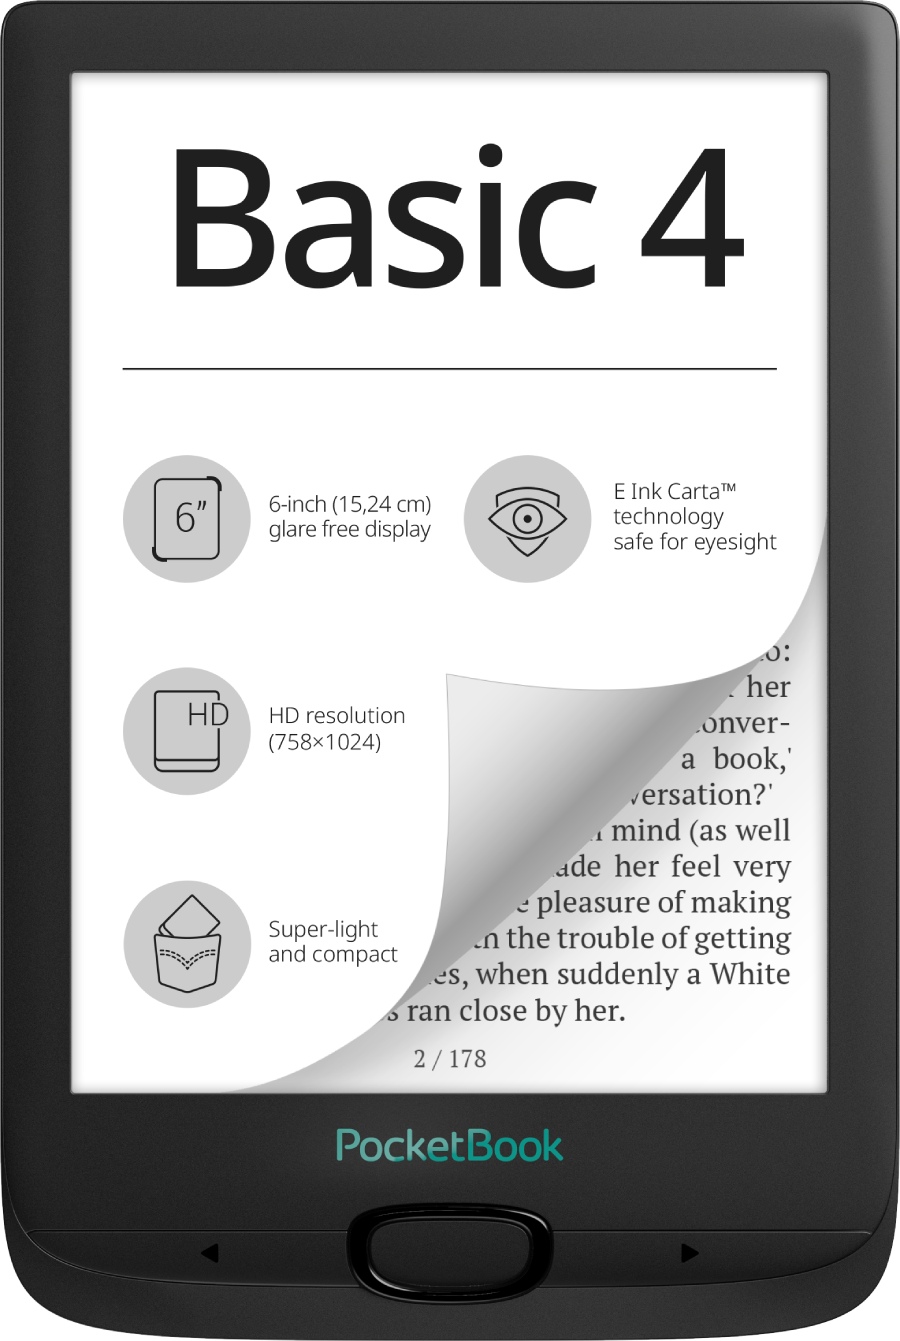 New PocketBook like Basic – simple, ingenious 4 all